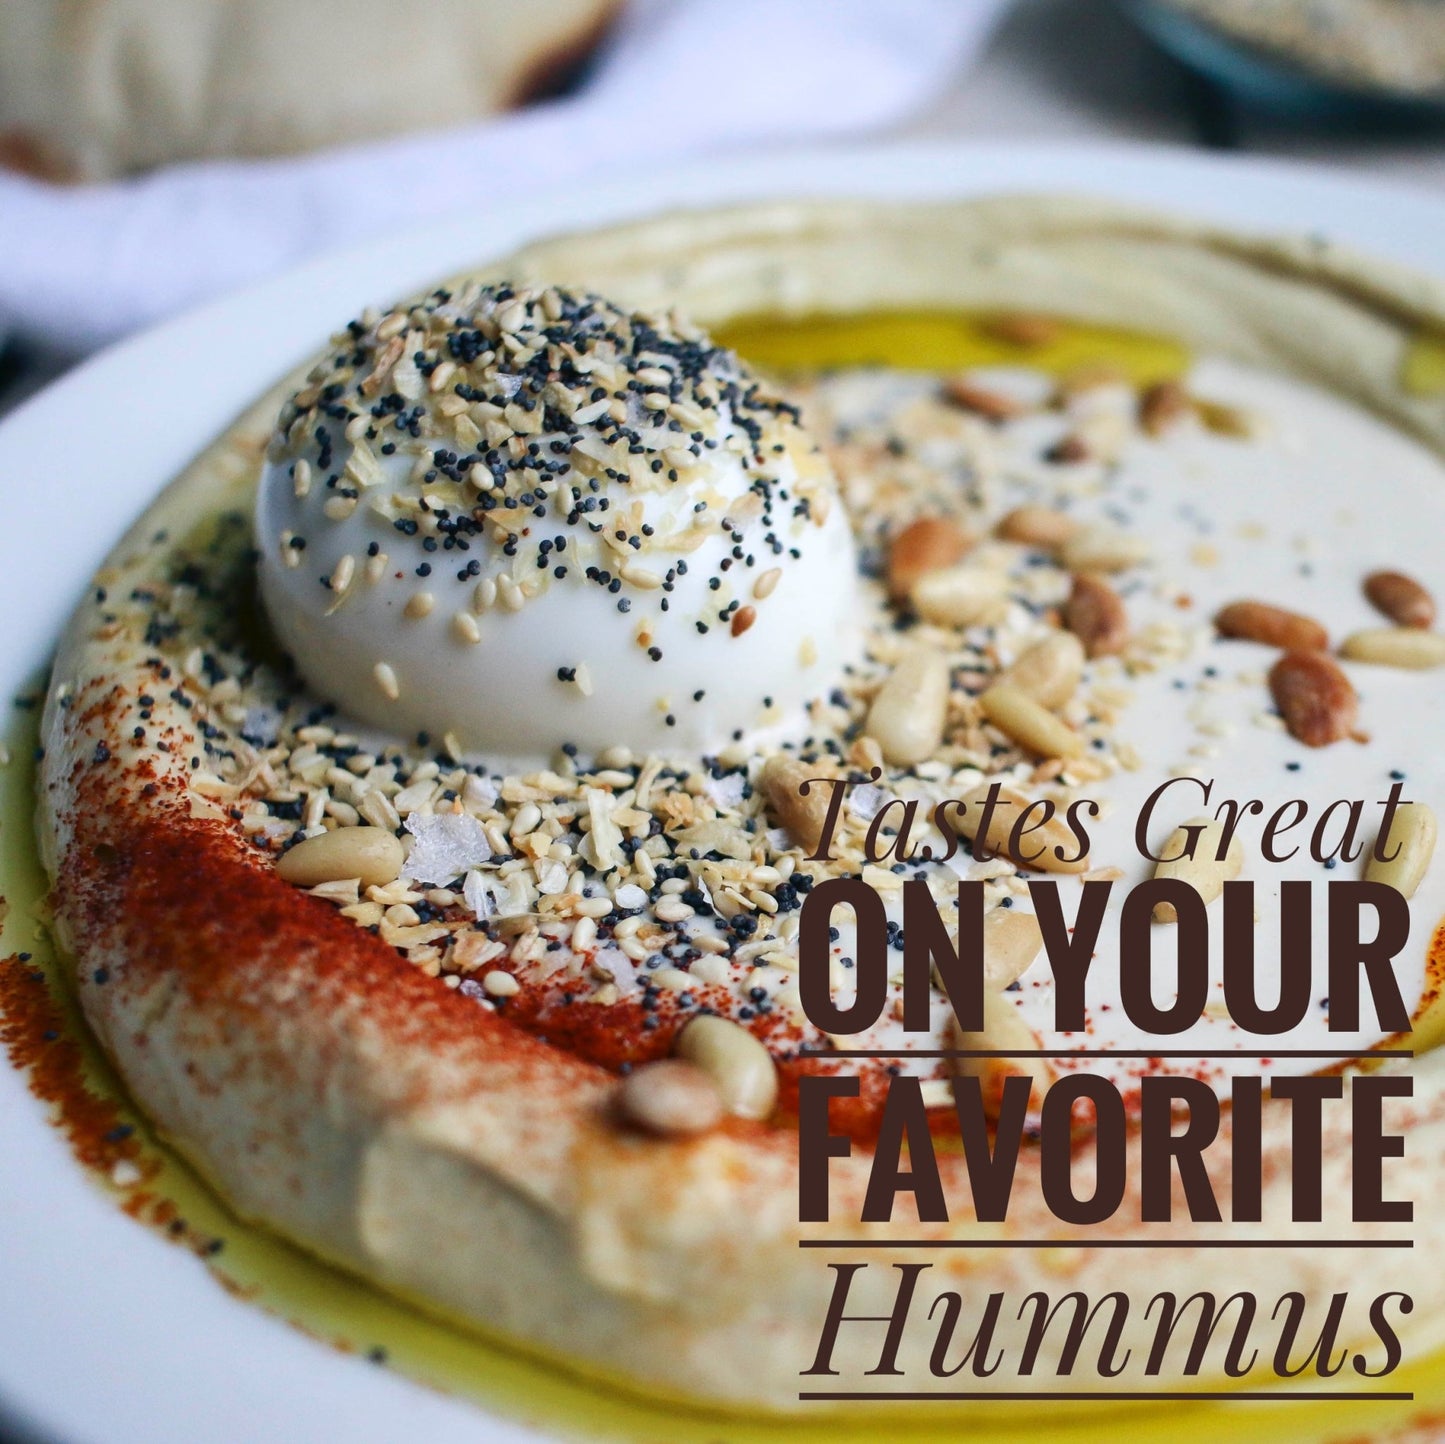 Hummus, Original bagel seasoning